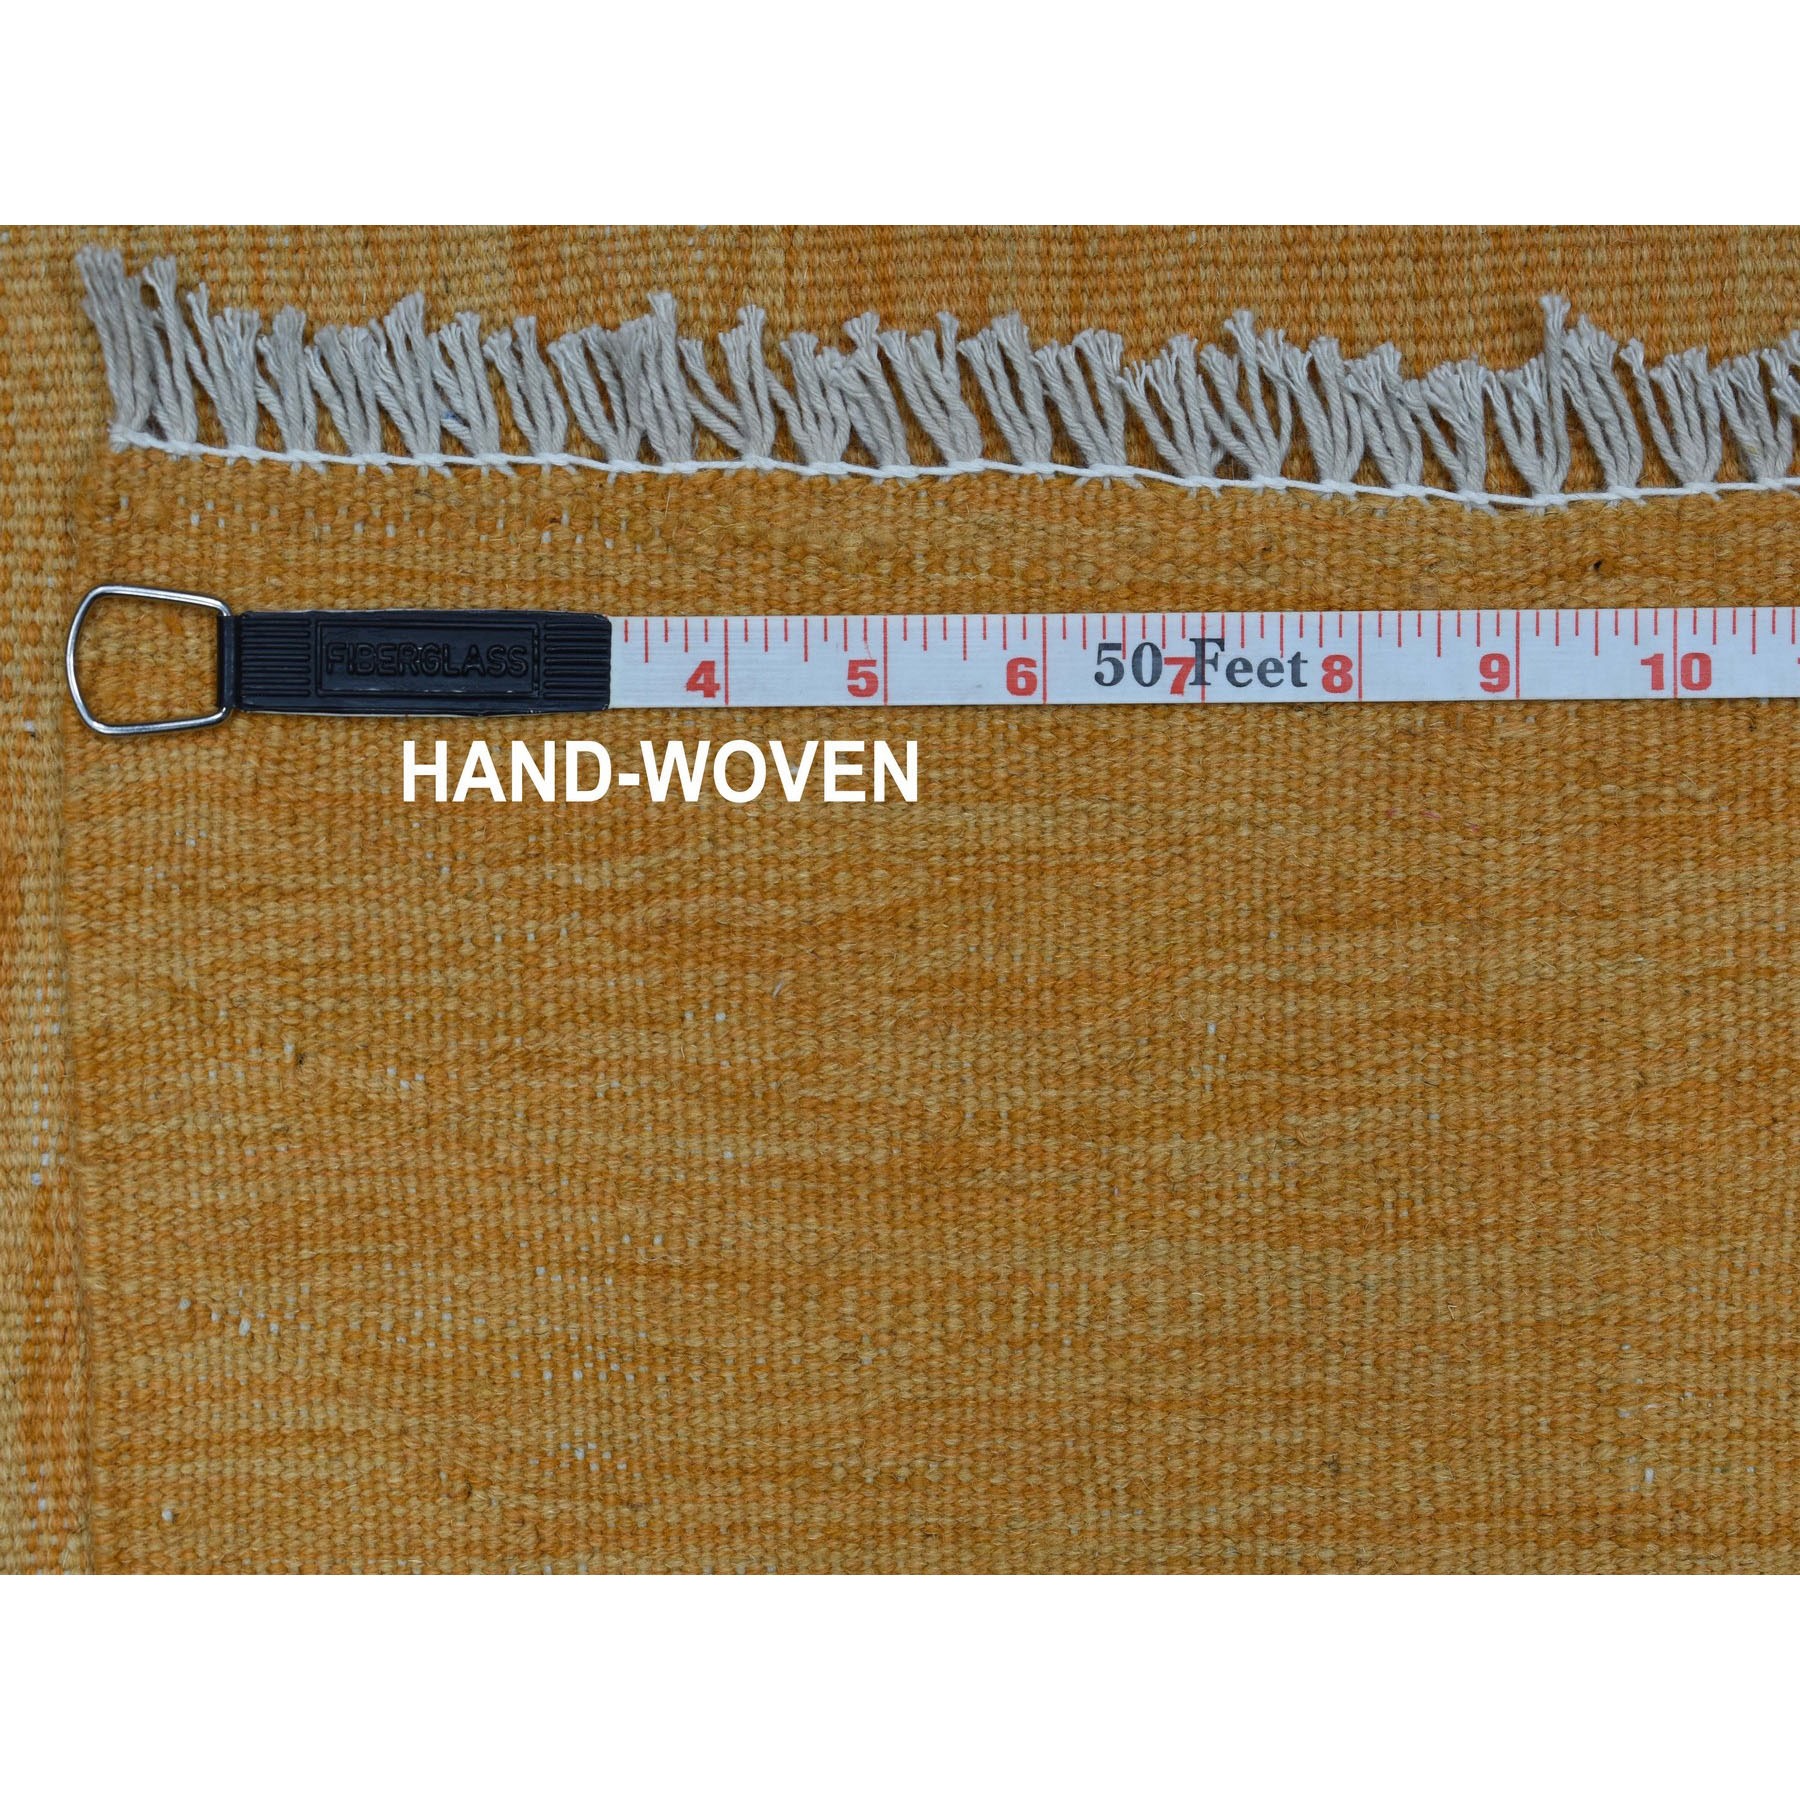 2-4 x6-4  Gold Shades Flat Weave Kilim Pure Wool Hand Woven Runner Oriental Rug 